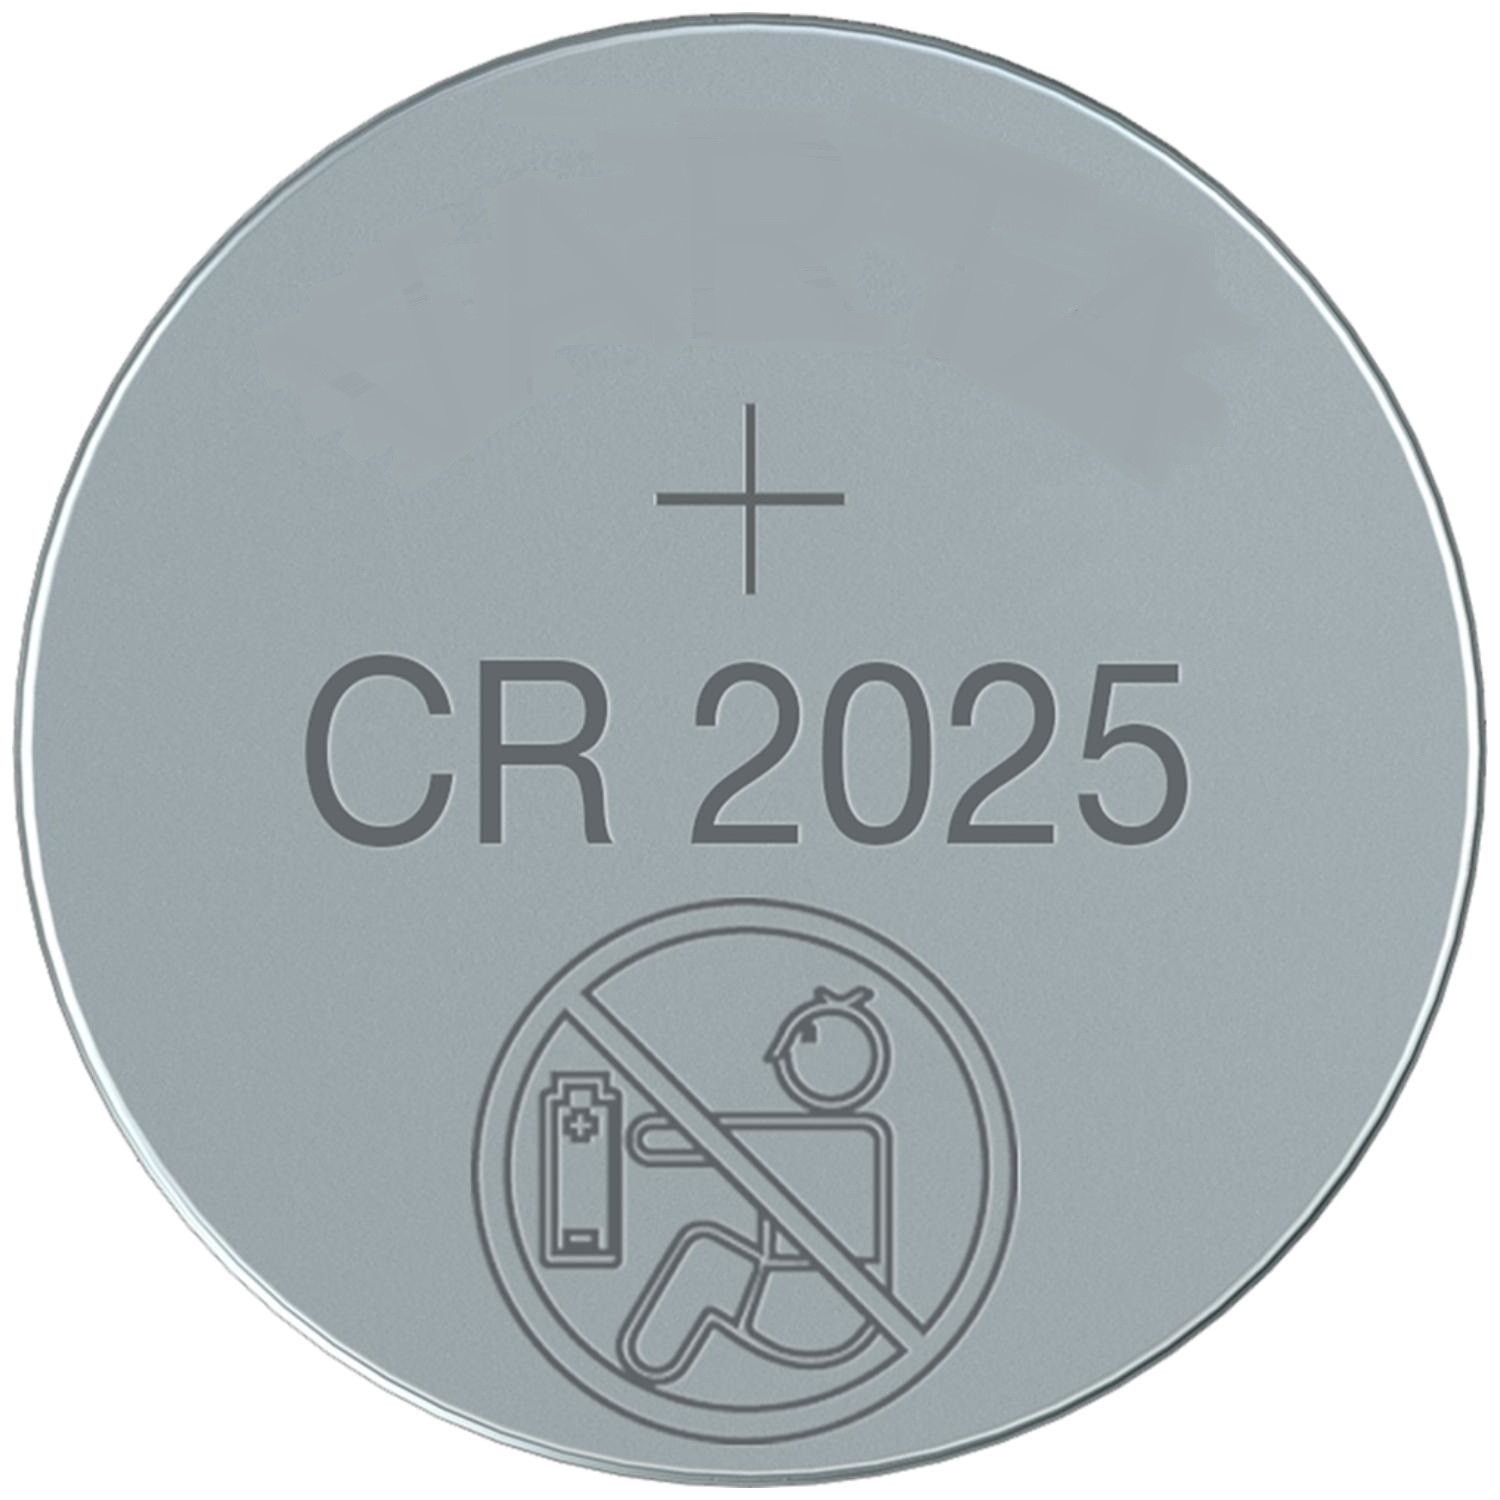 Batterij CR 2025 per stuk verpakt